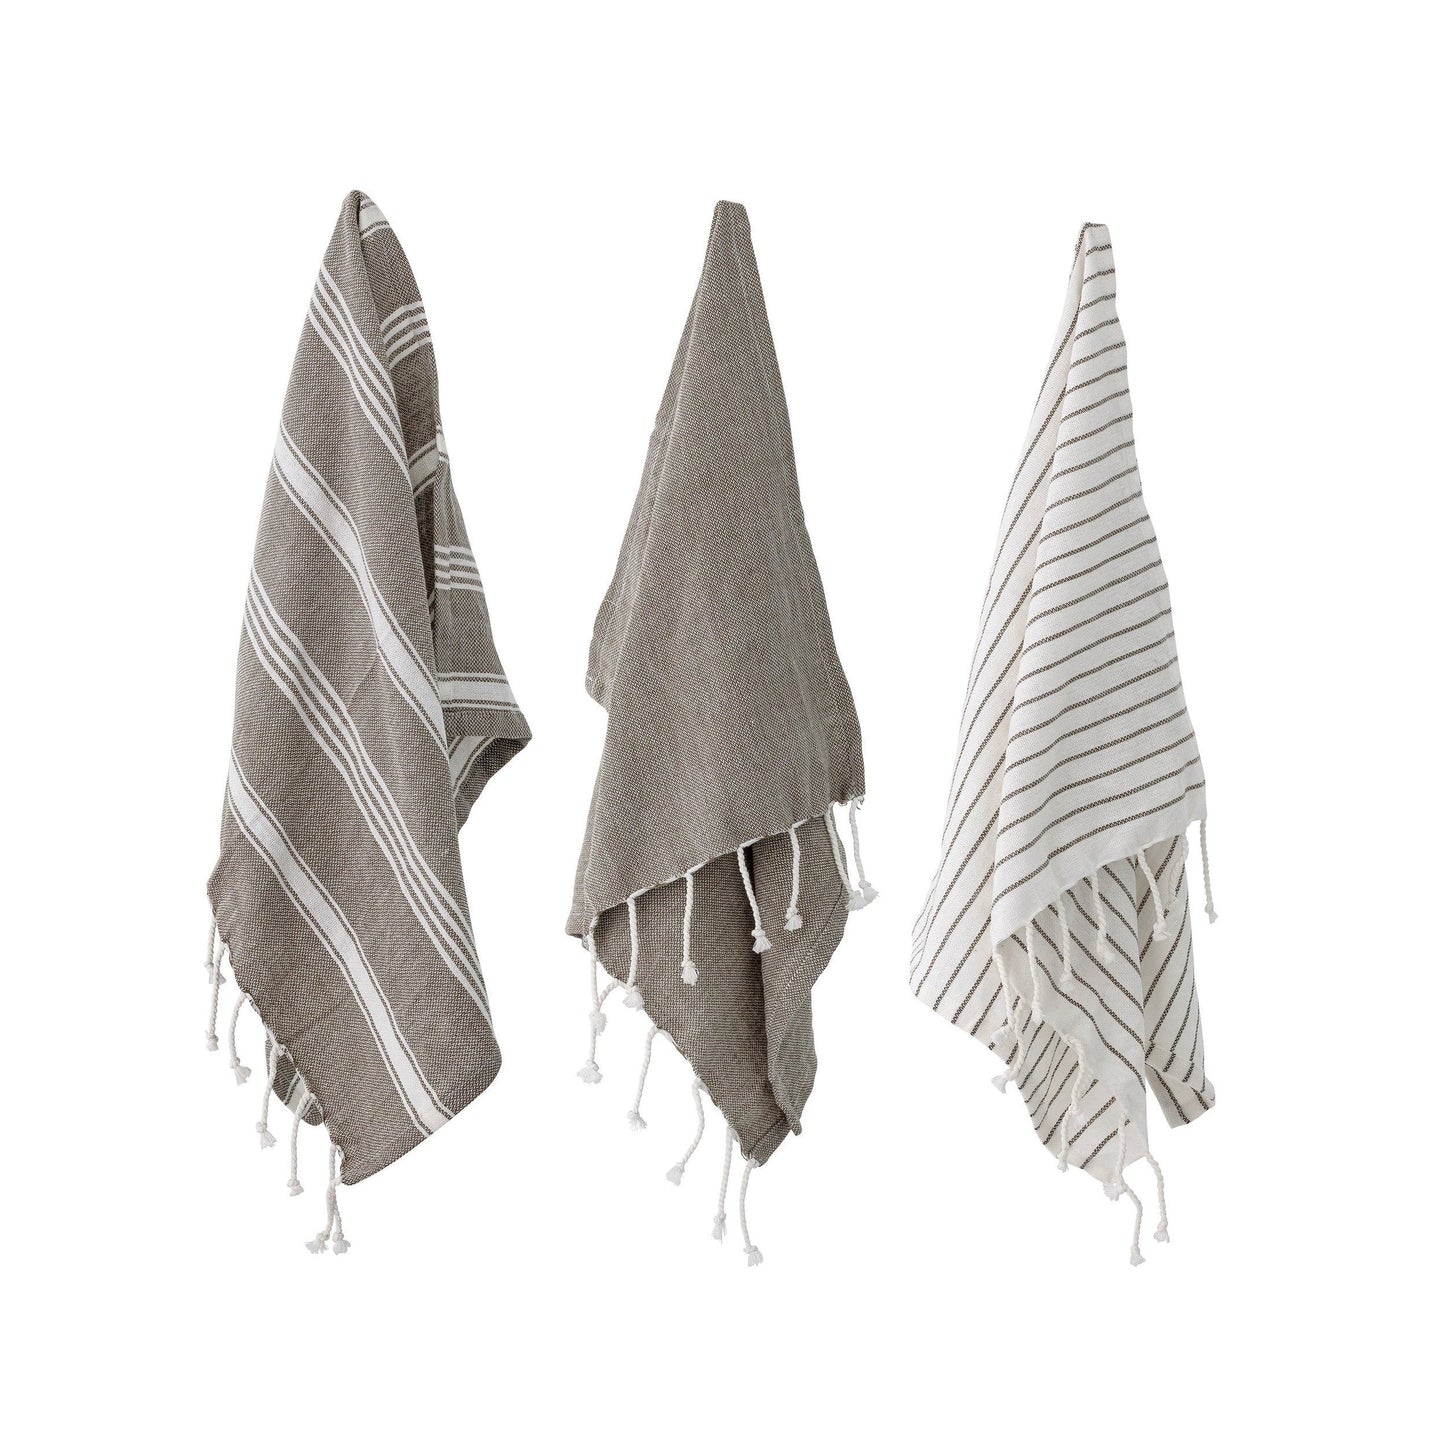 Bloomingville - Stripe Tea Towel with Tassels - Grey + White Stripe